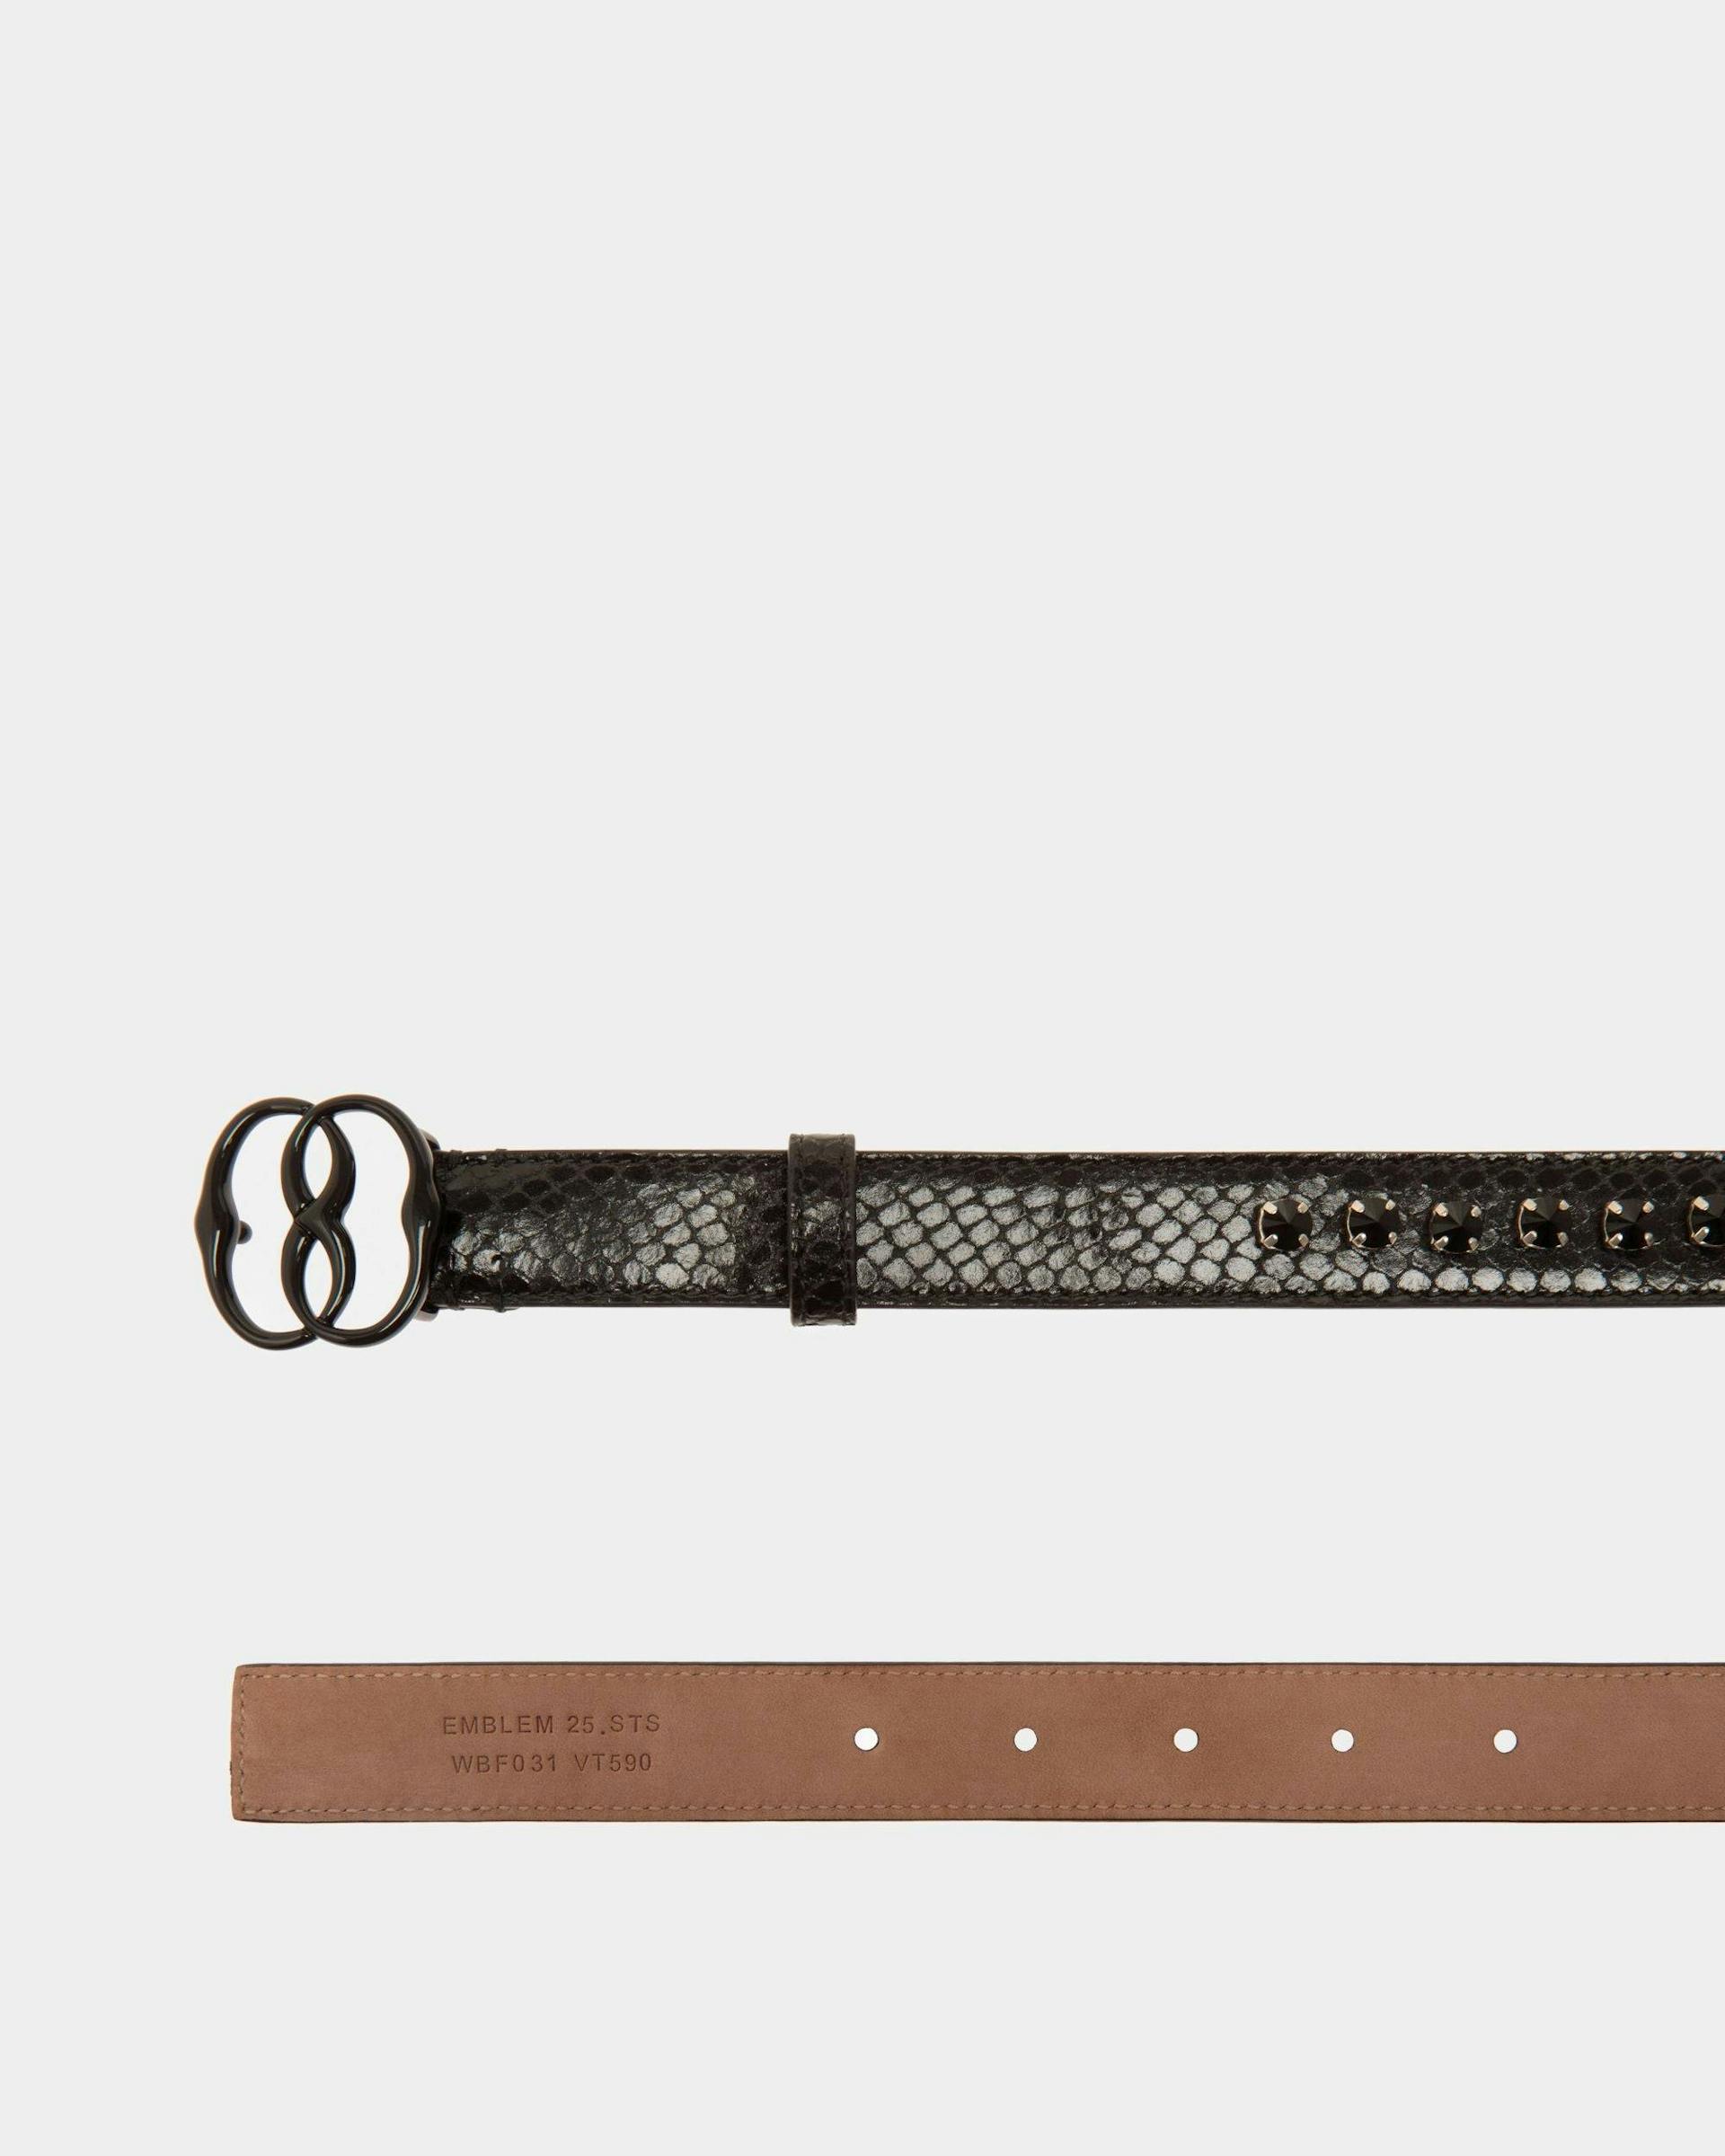 Women's Emblem 25mm Belt in Black Python Printed Leather | Bally | Still Life Detail